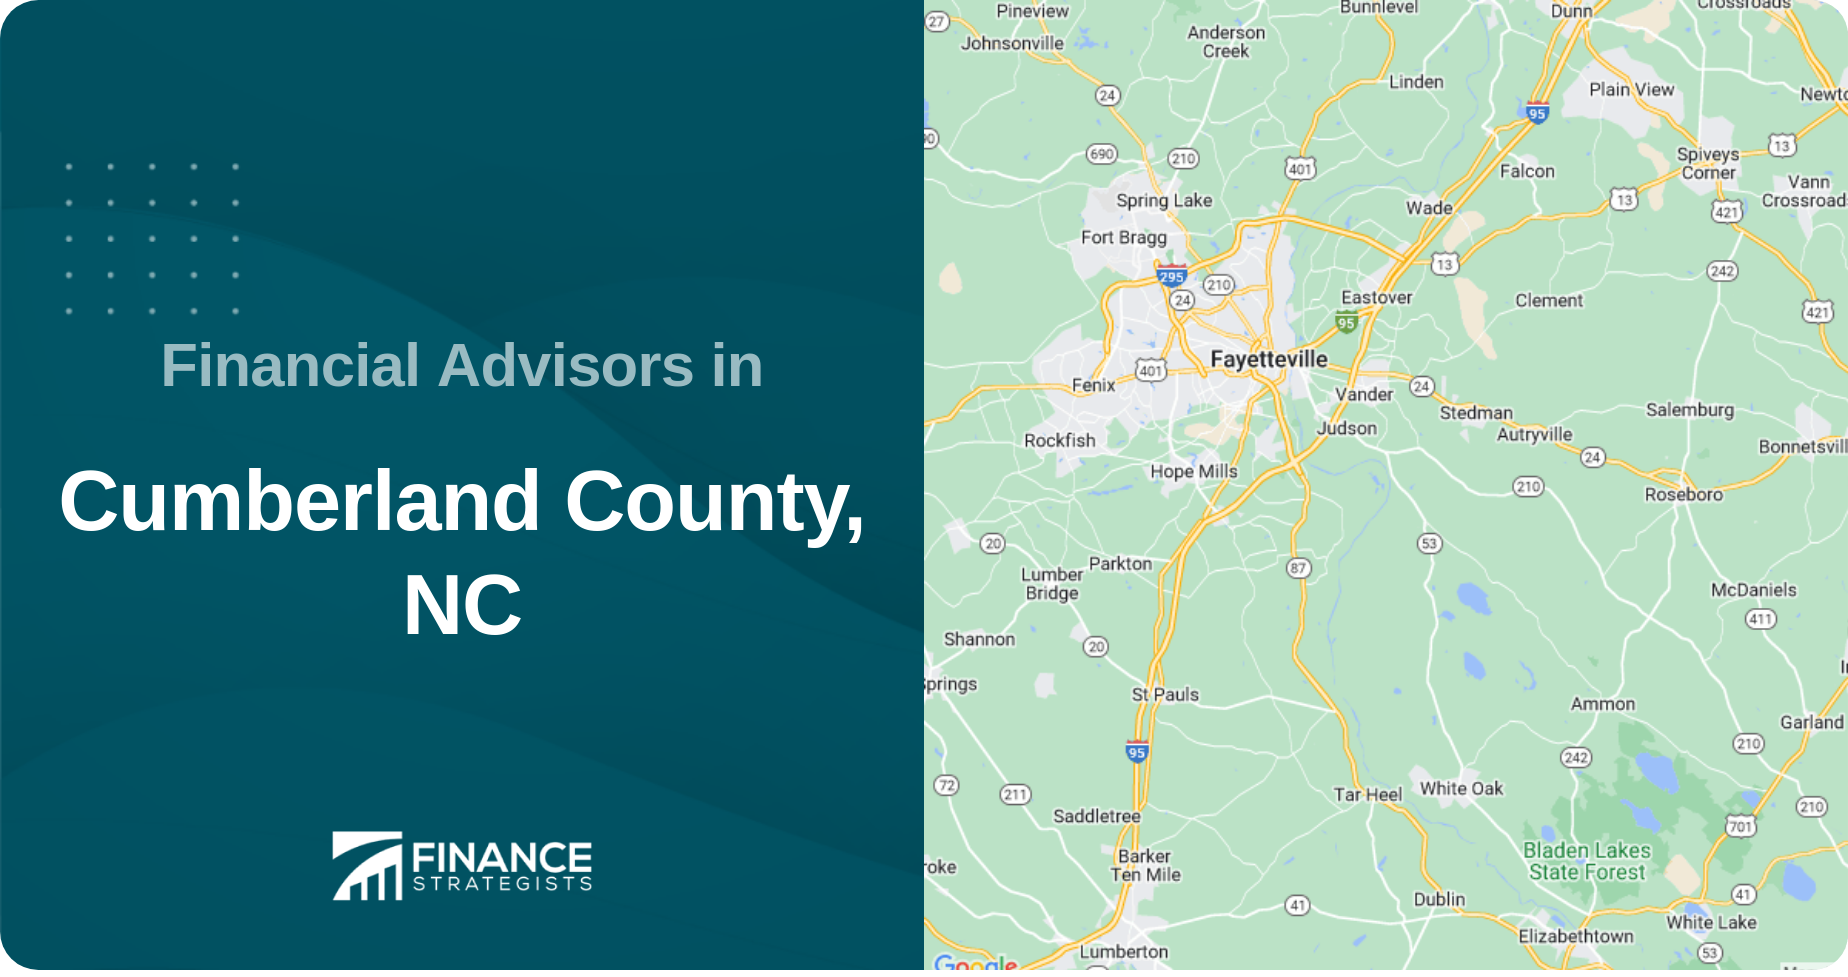 Financial Advisors in Cumberland County, NC